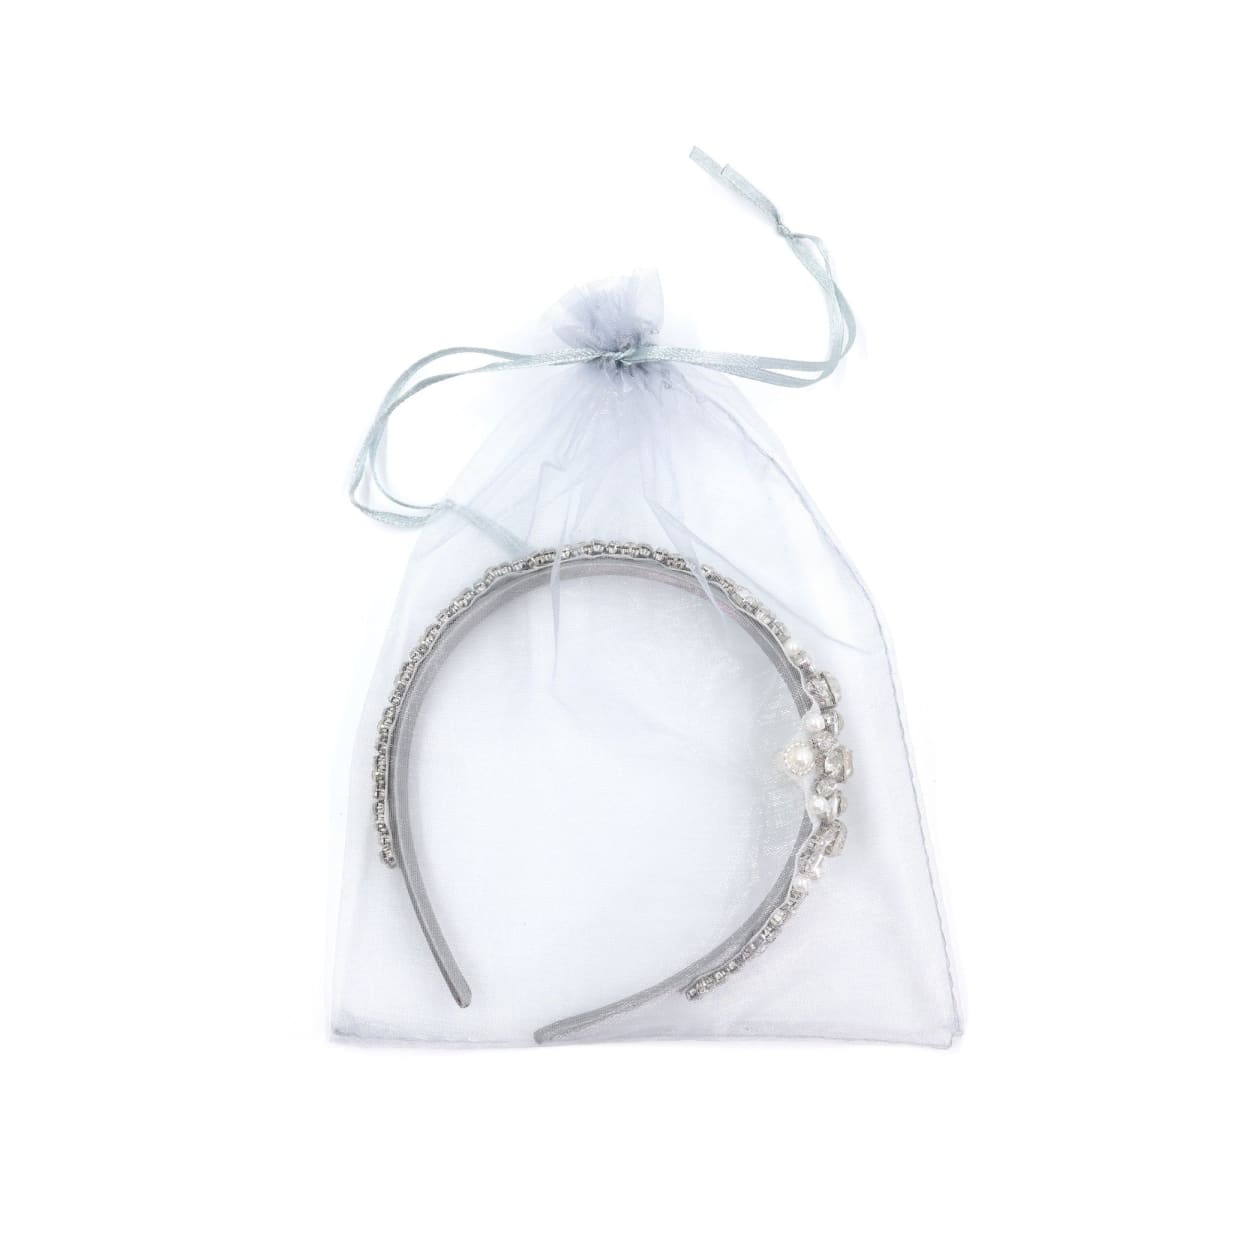 Vintage Bride Bejeweled Asymmetrical Headband Tiara | Royalty Crown Party or Bridal Hair Accessory